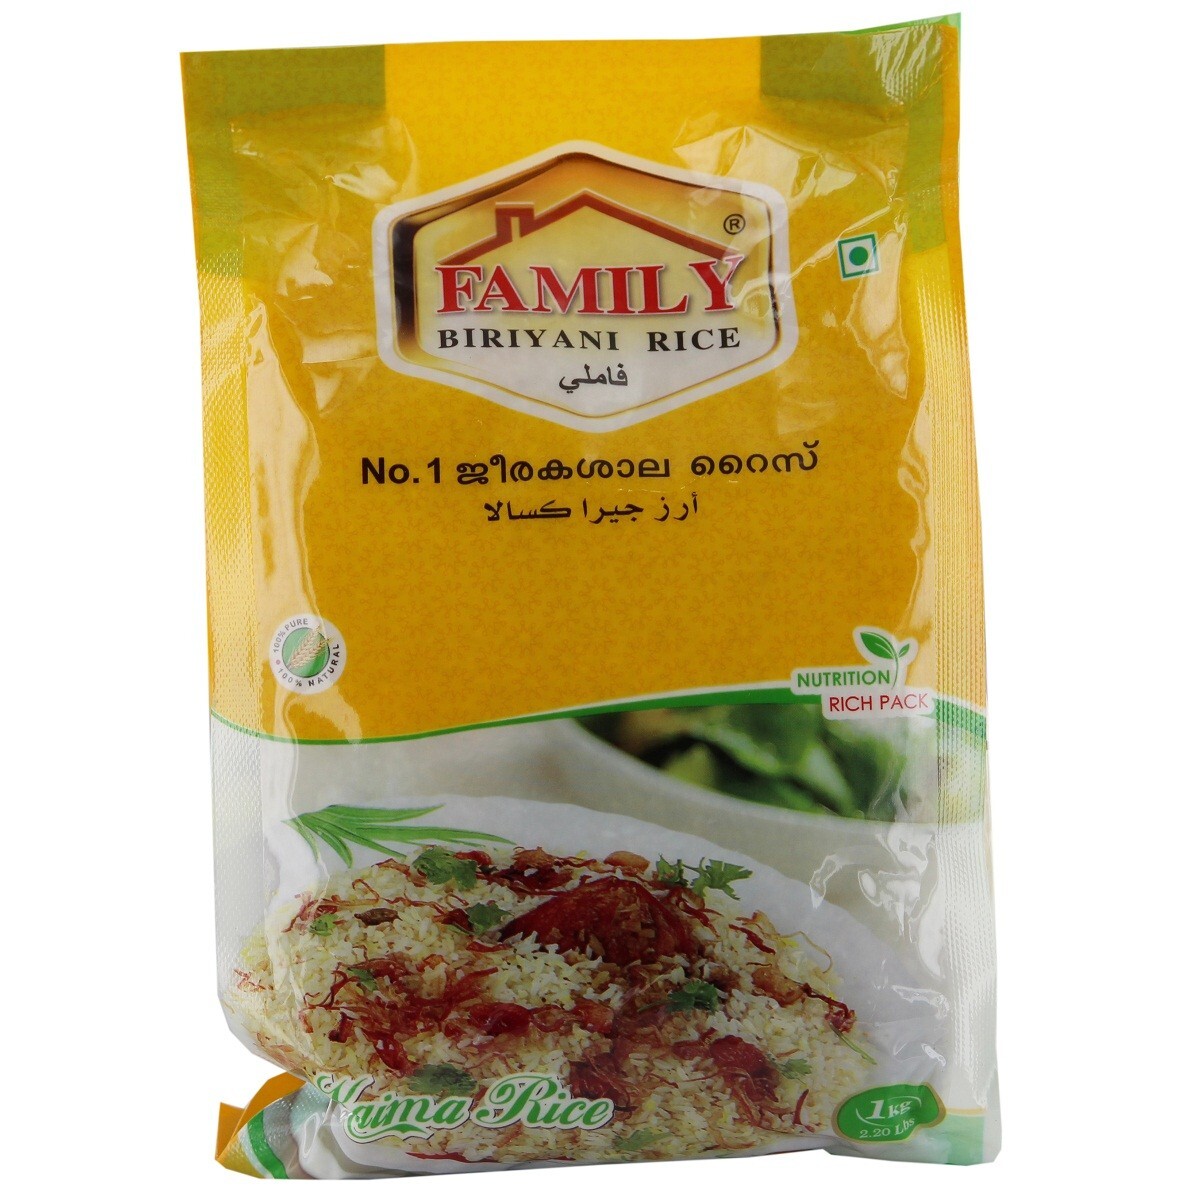 Family Biriyani Rice Jeerakasala 1kg